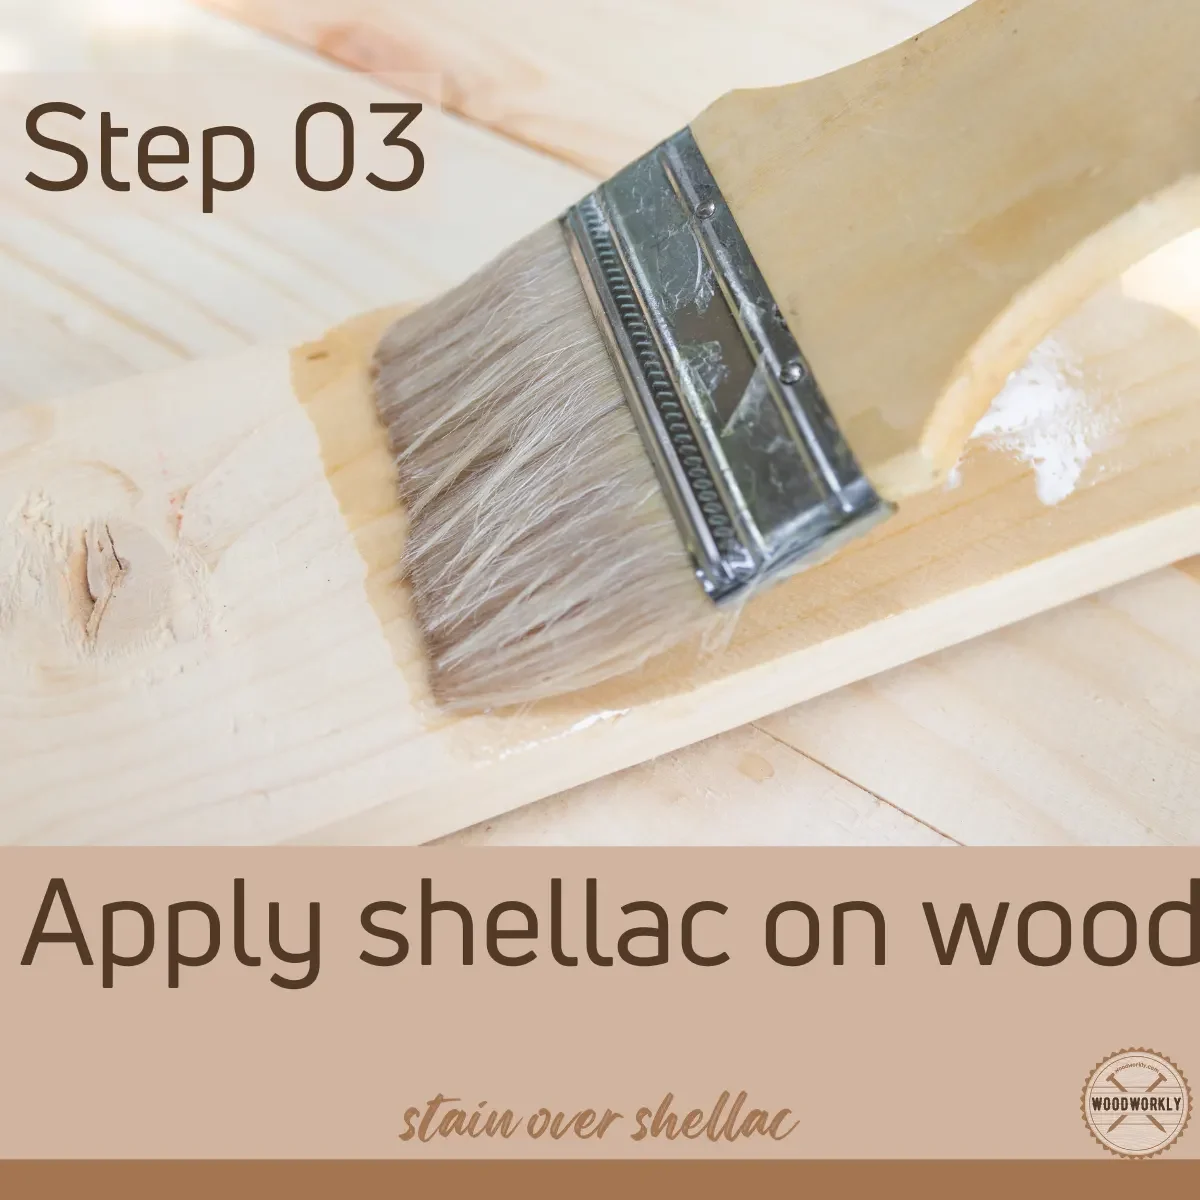 Apply shellac on wood